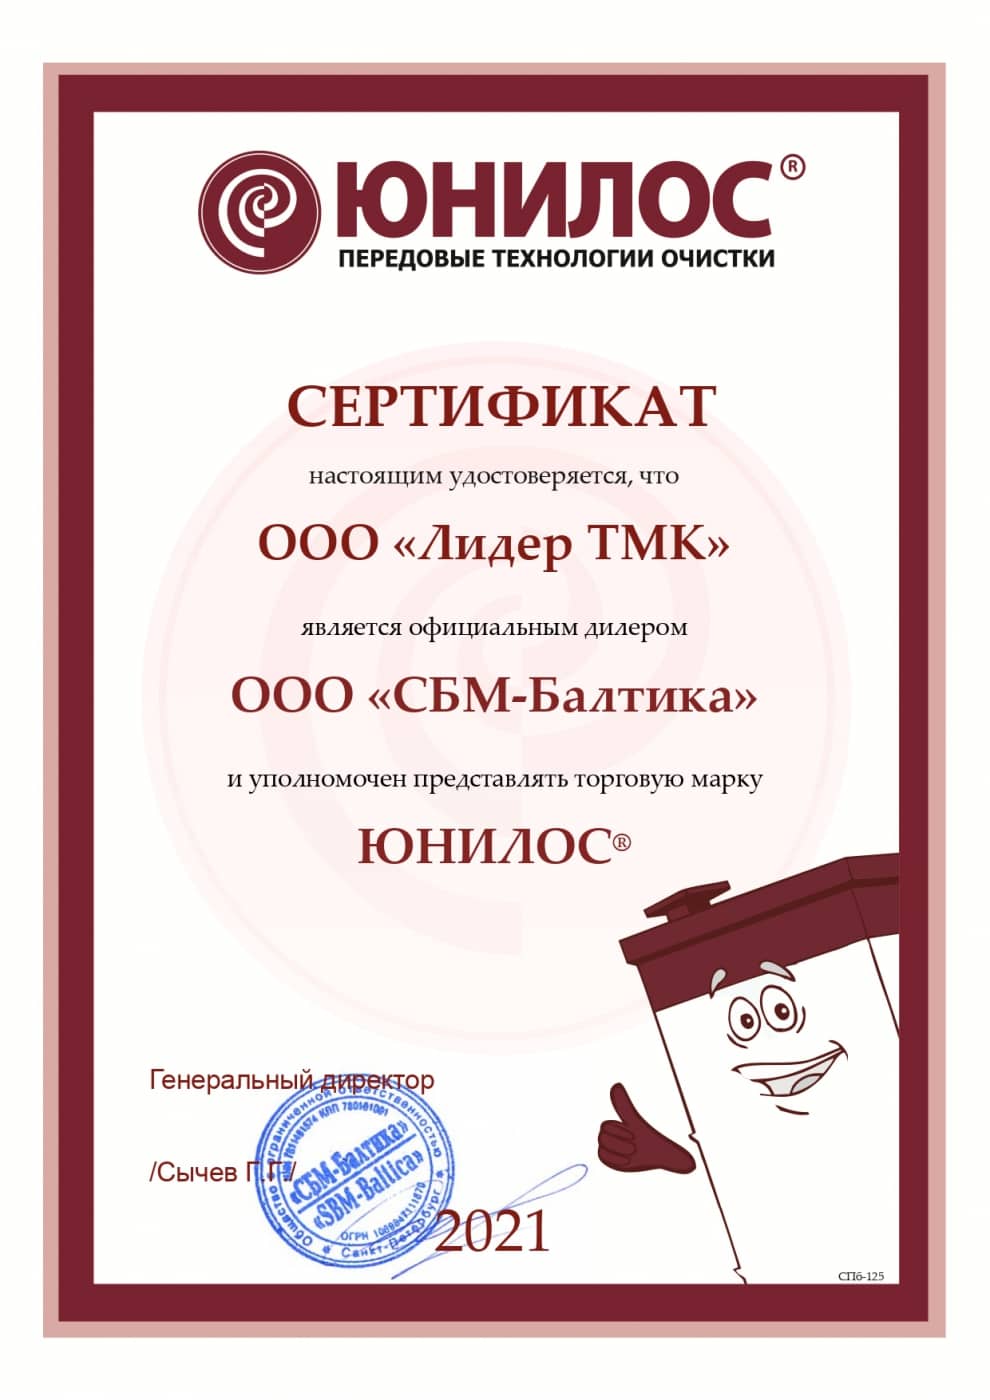 Септик Астра ДАБЛ 7 сертификат